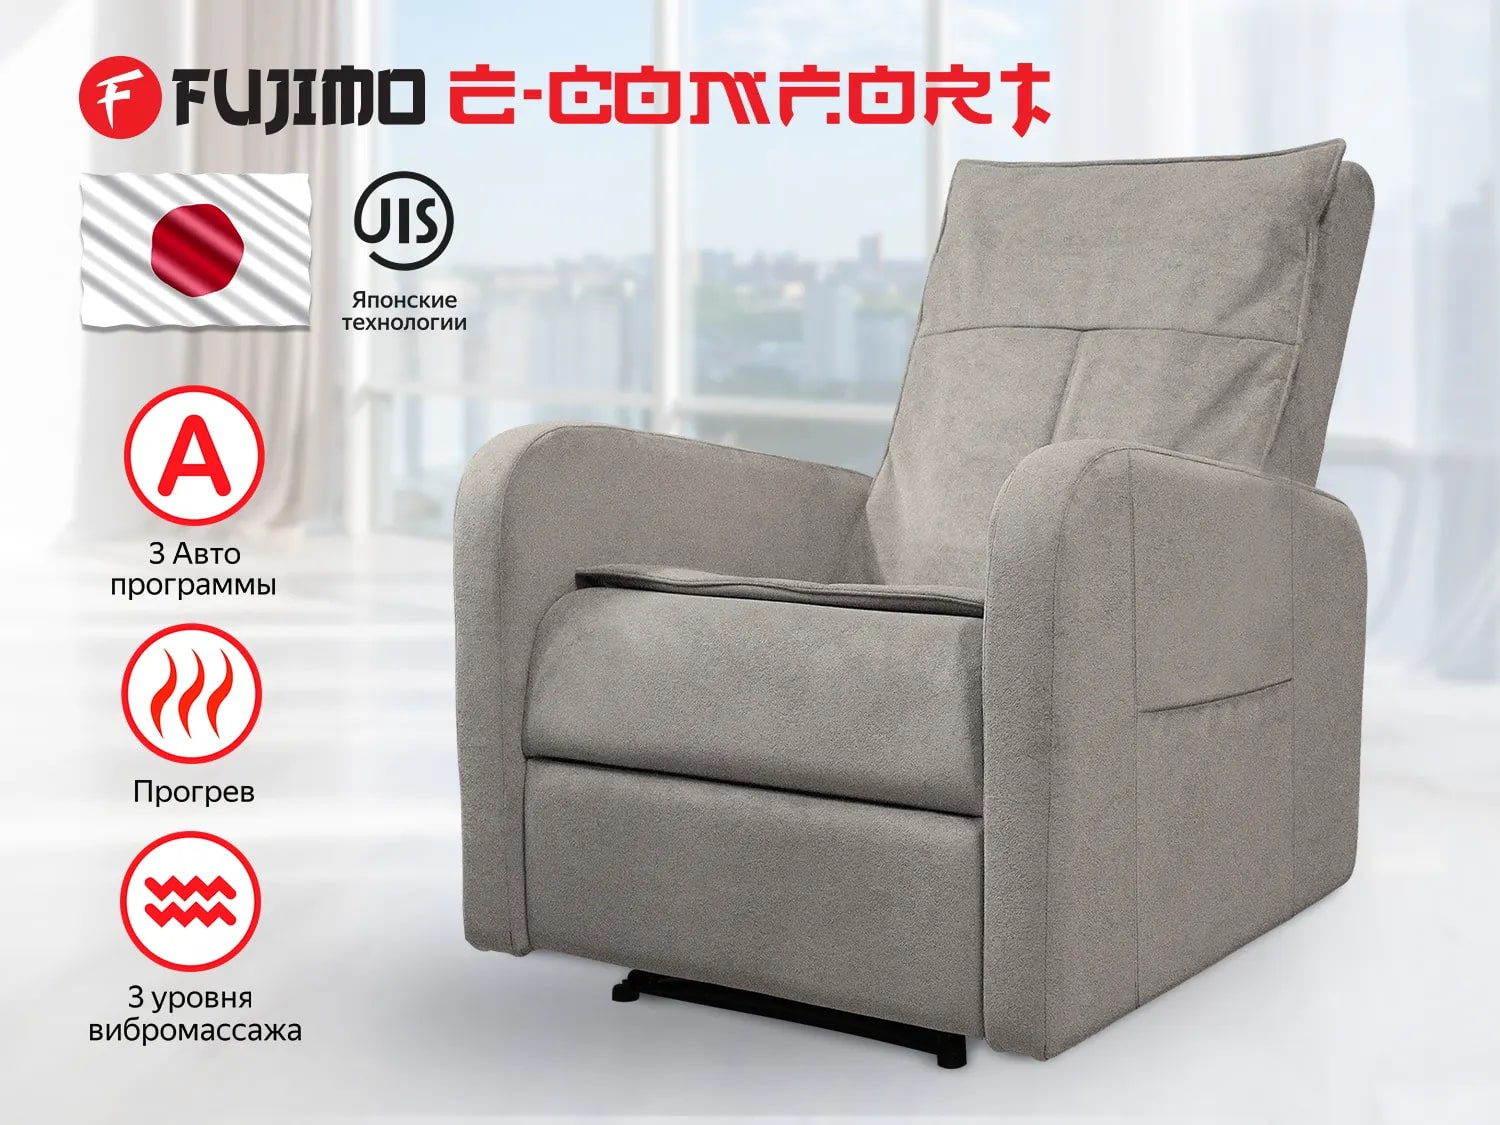 E-COMFORT CHAIR F3005 FEF с электроприводом Грейси в СПб по цене 72000 ₽ в категории массажные кресла Fujimo